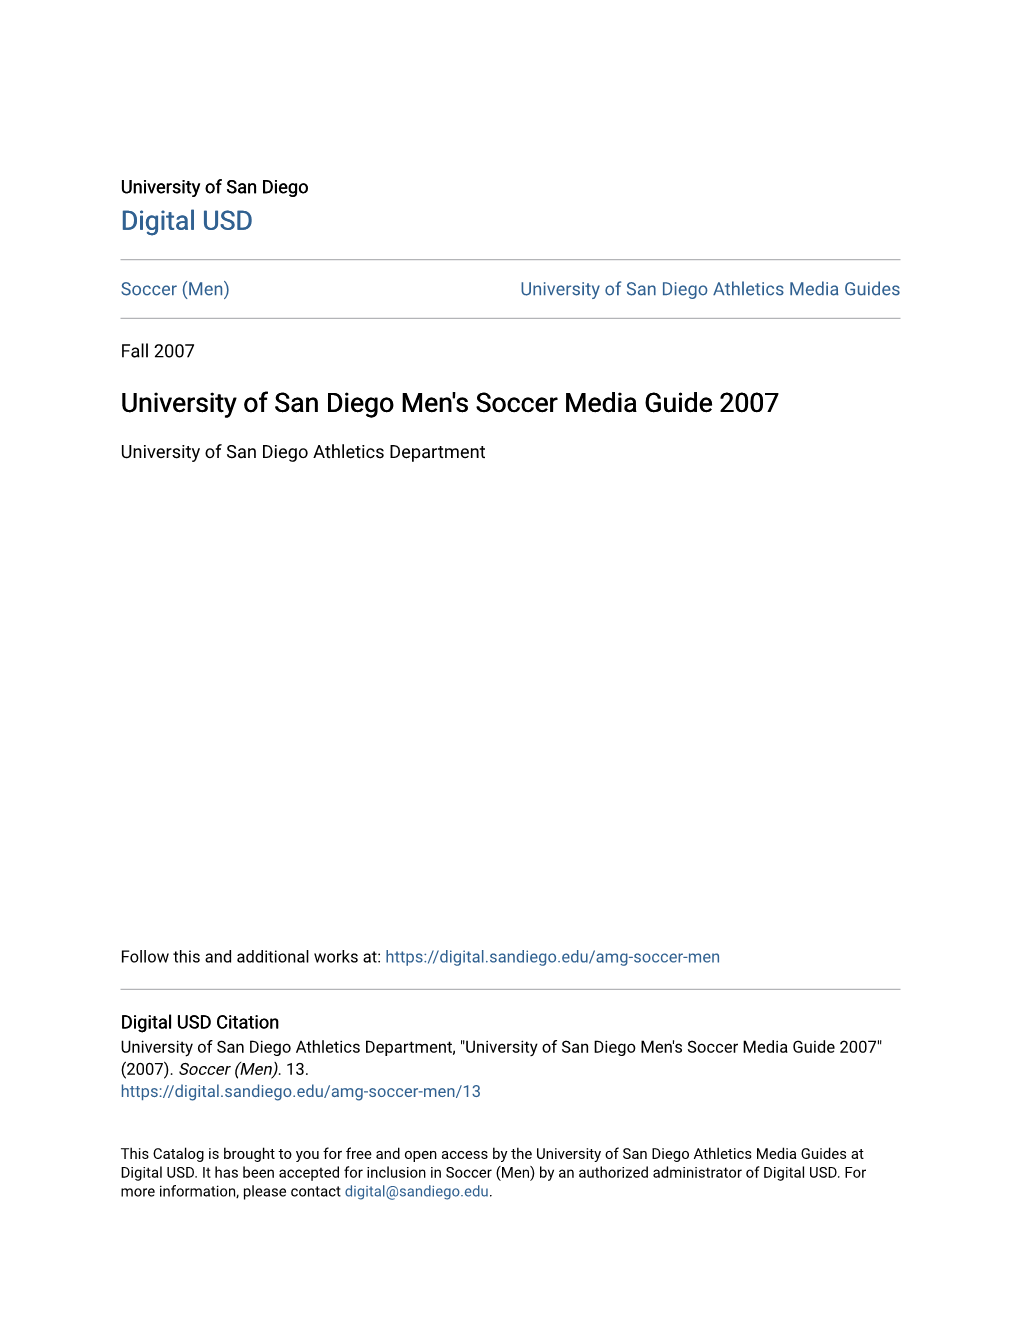 University of San Diego Men's Soccer Media Guide 2007